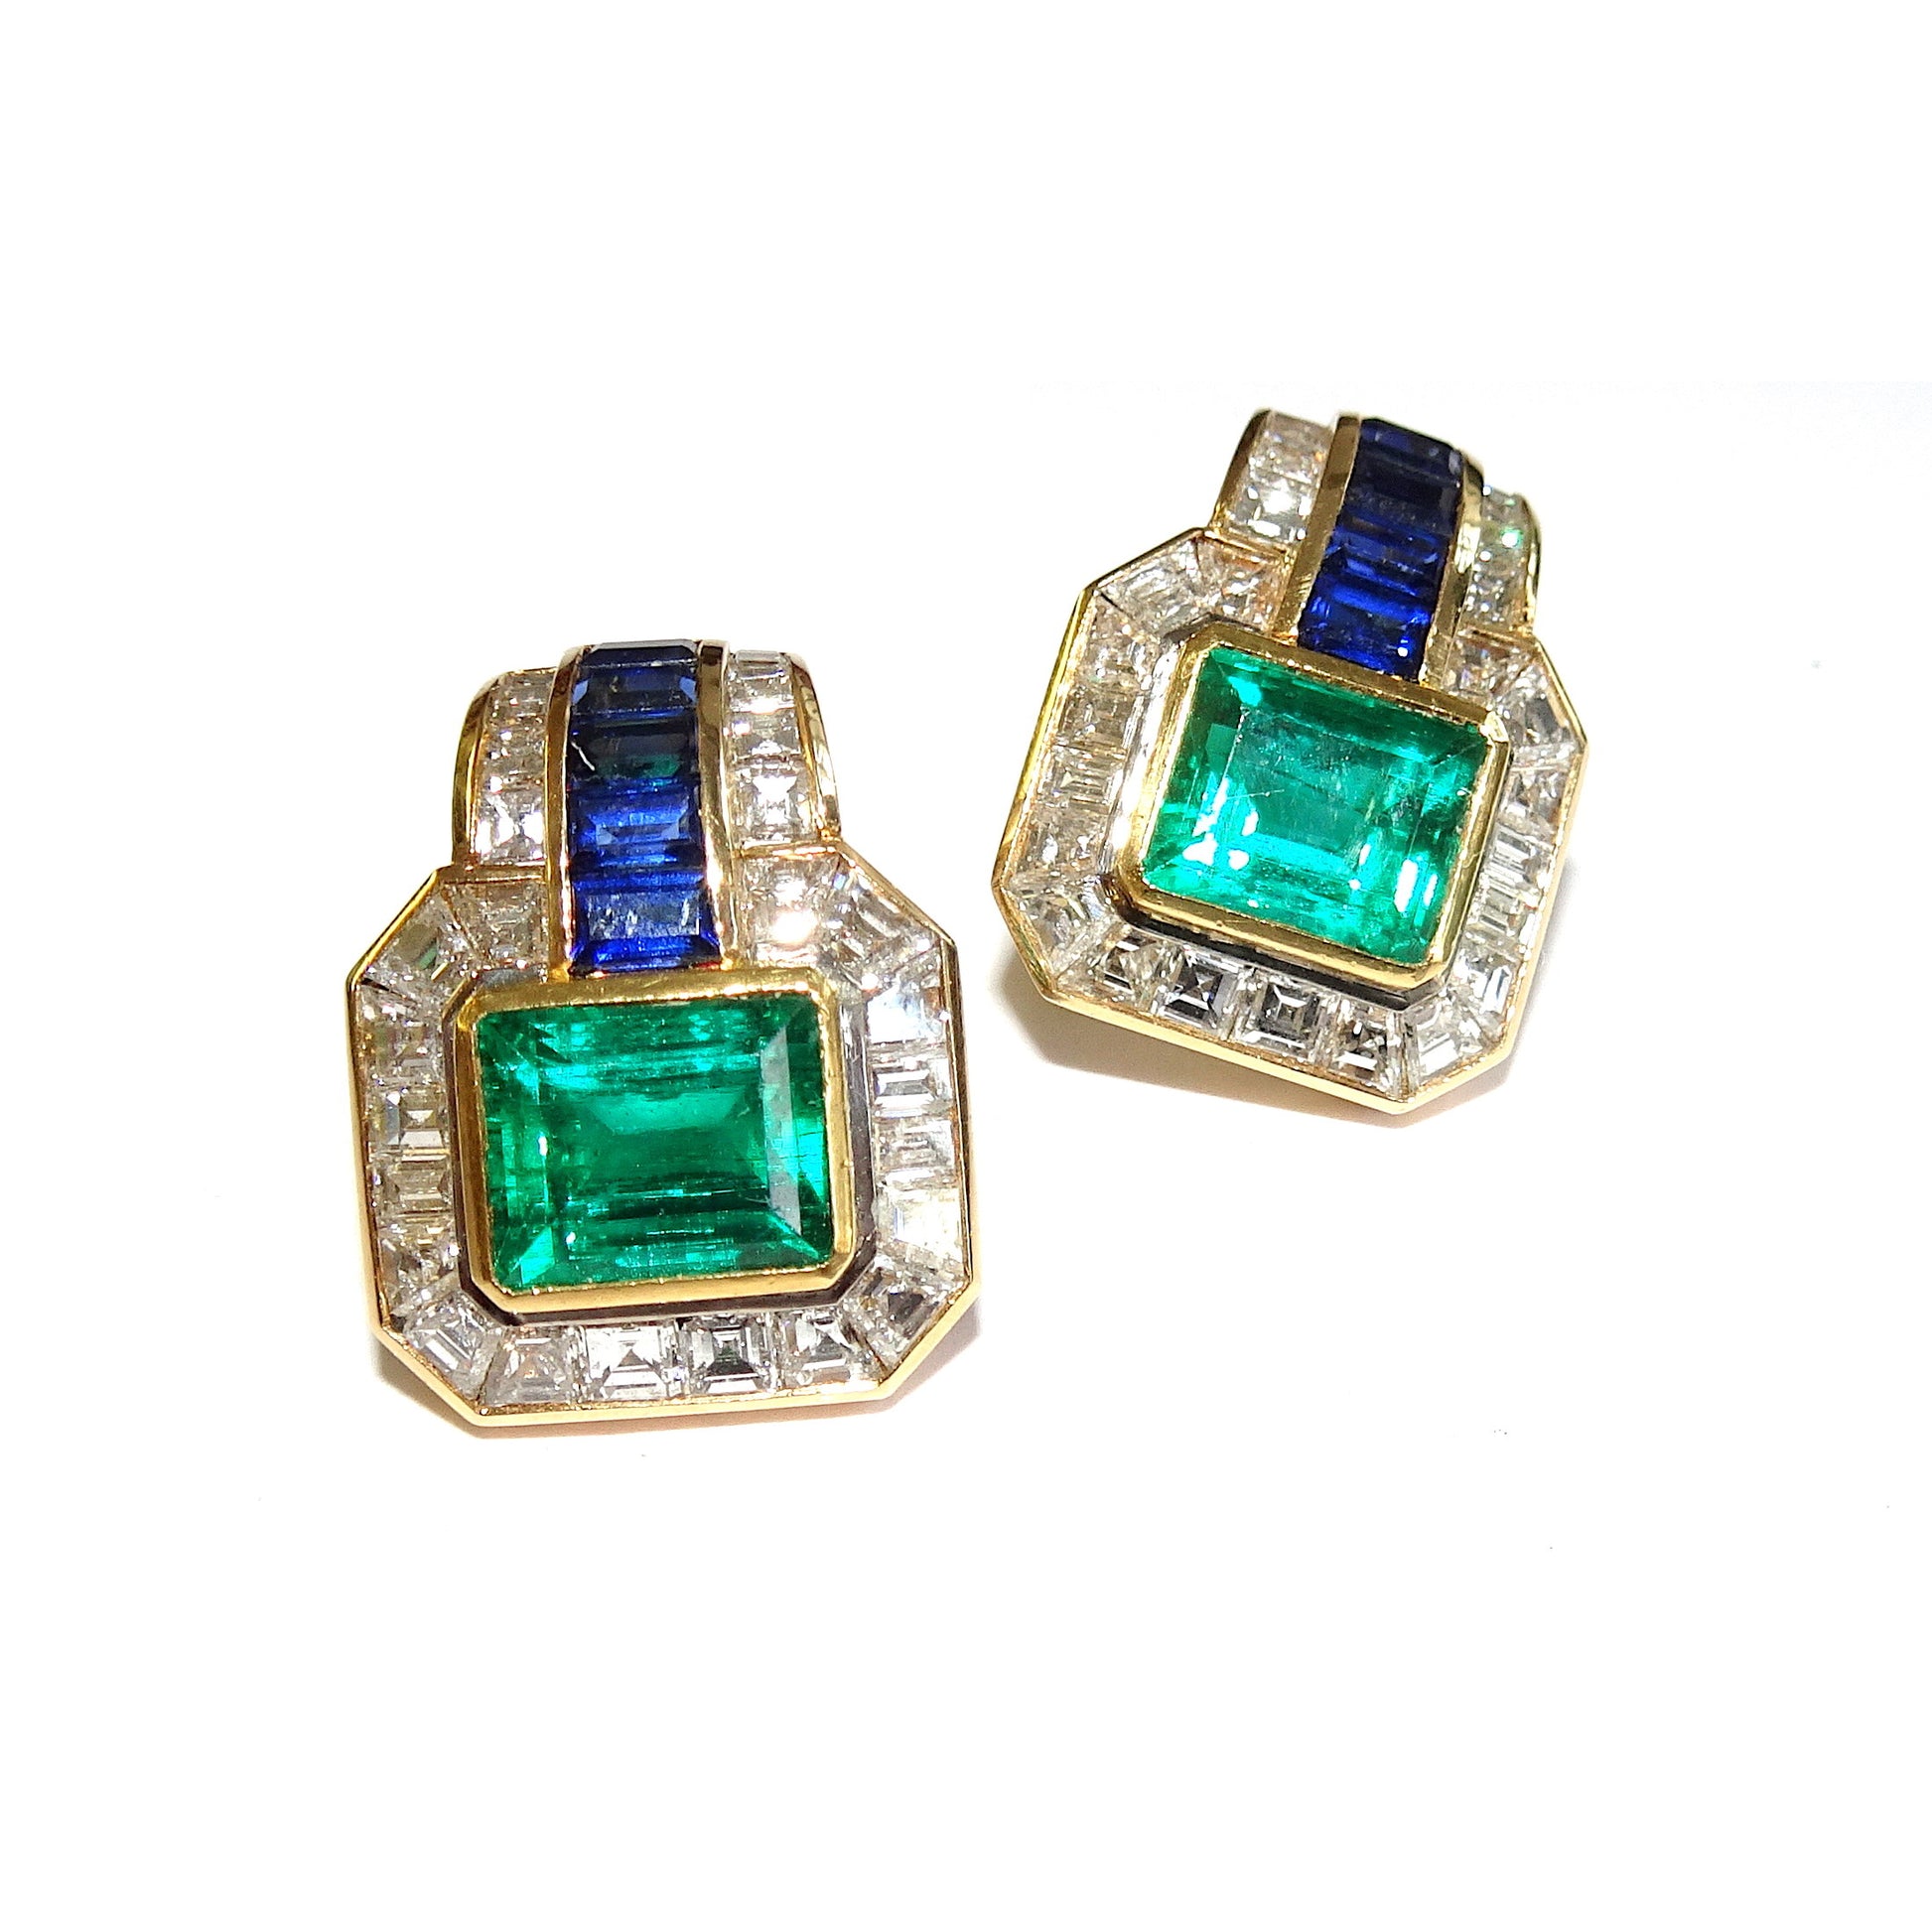 A. Hörner 1980s 18KT Yellow Gold Emerald, Diamond & Sapphire Earrings front